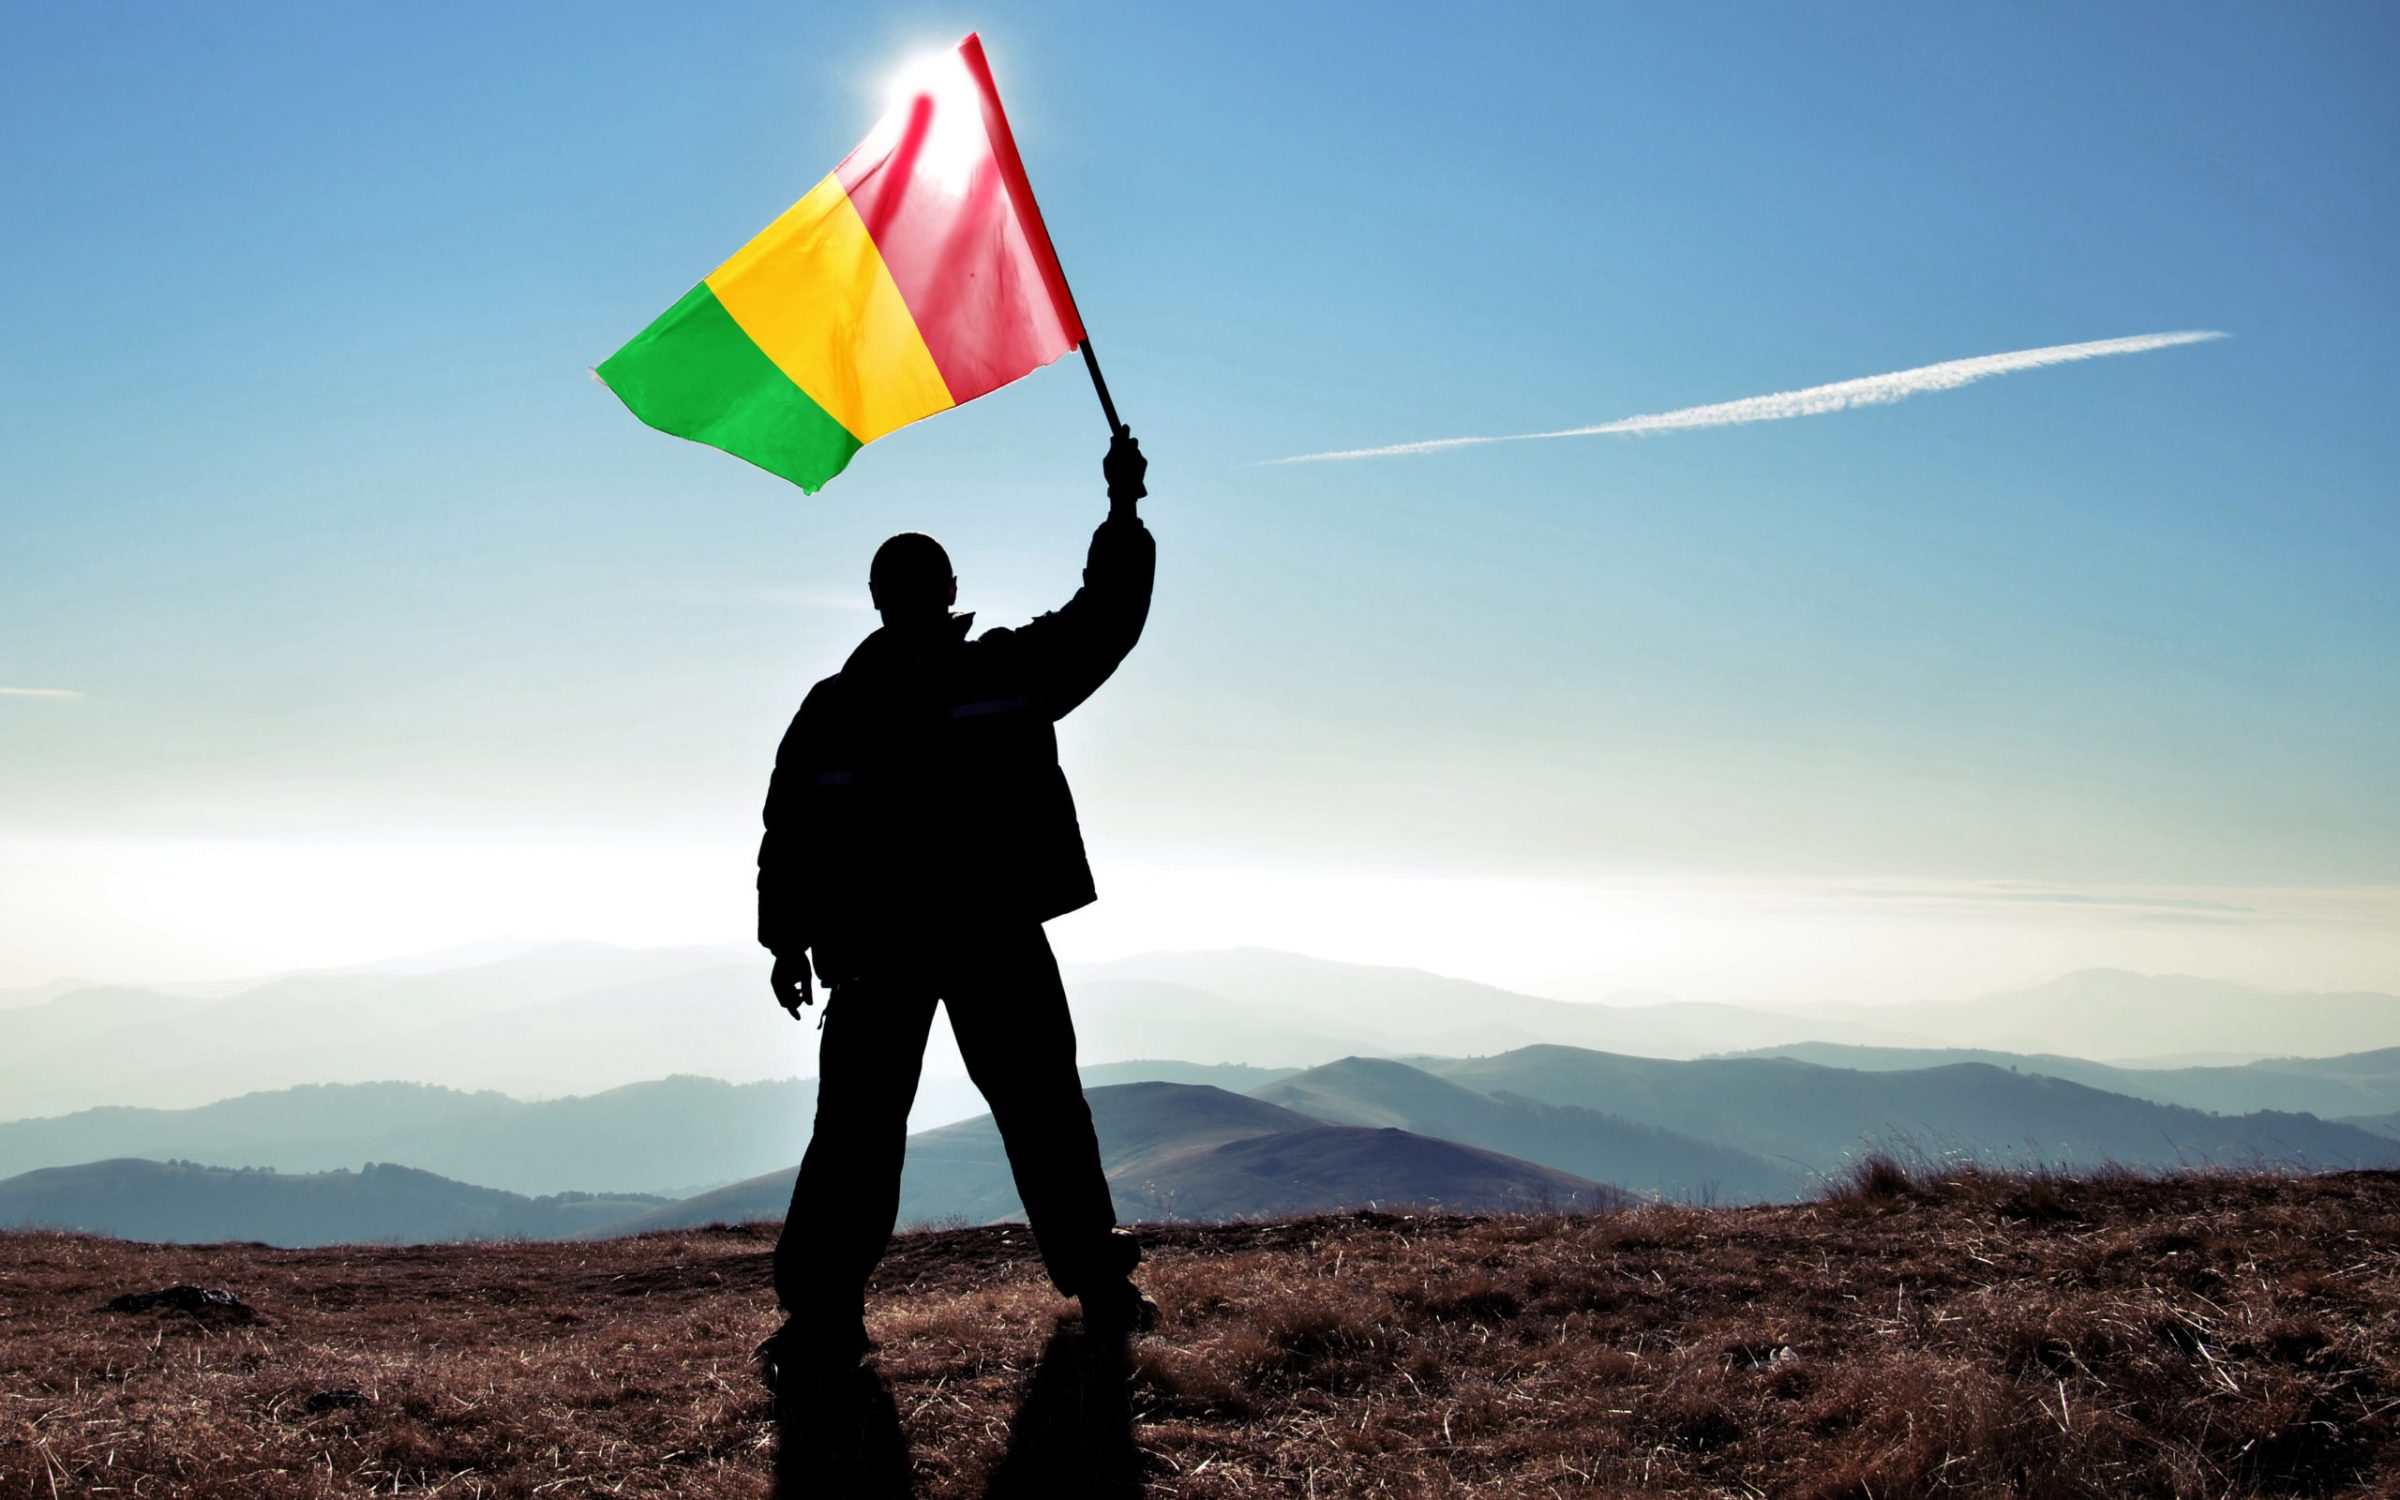 Successful silhouette man winner waving Mali flag on top of the mountain peak